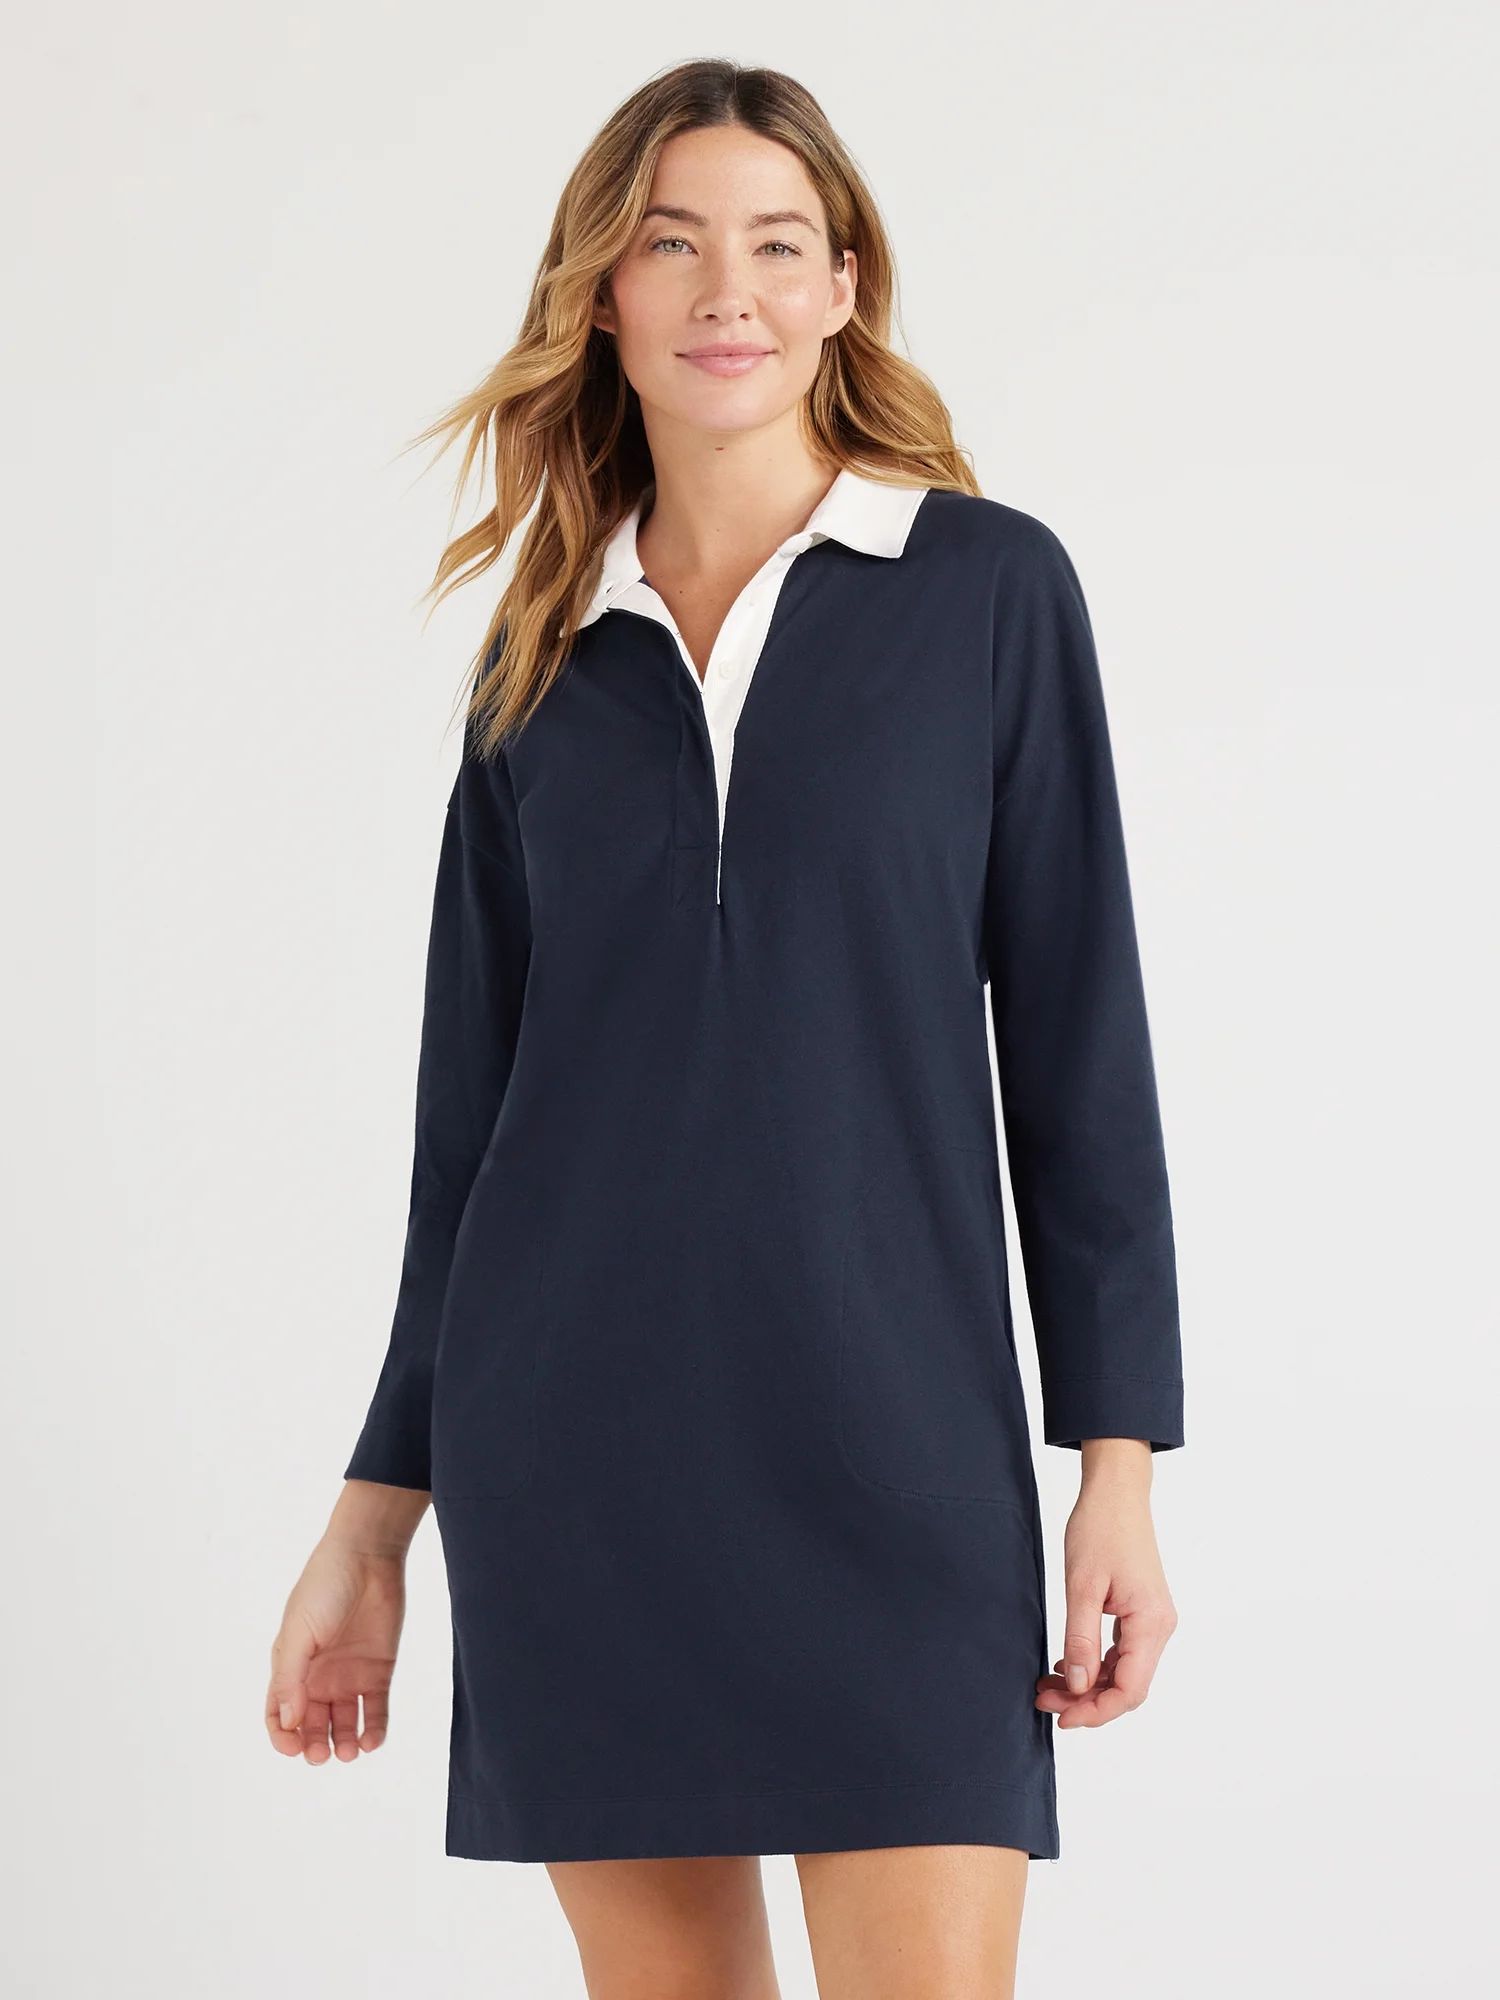 Free Assembly Women’s Striped Polo Mini Dress with Long Sleeves, Sizes XS-XXL | Walmart (US)